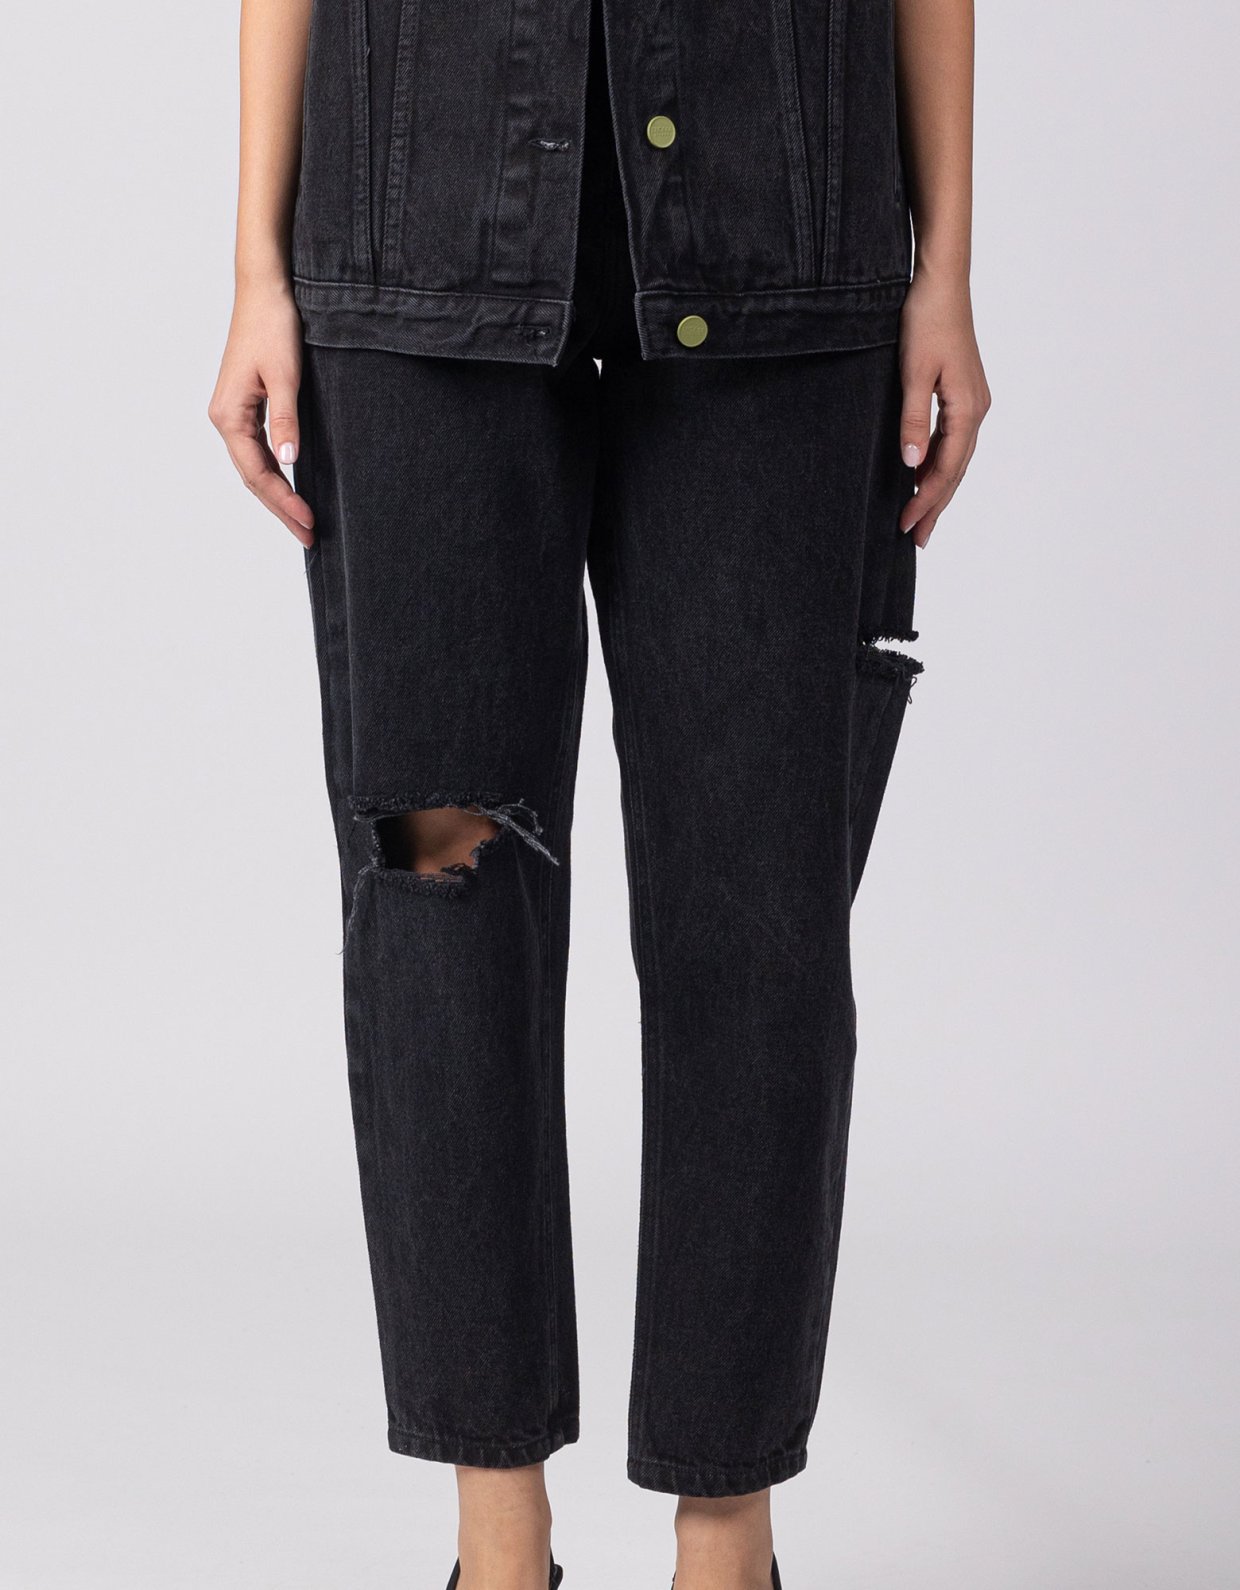 Sac & CO Jeans Domenica denim pants black